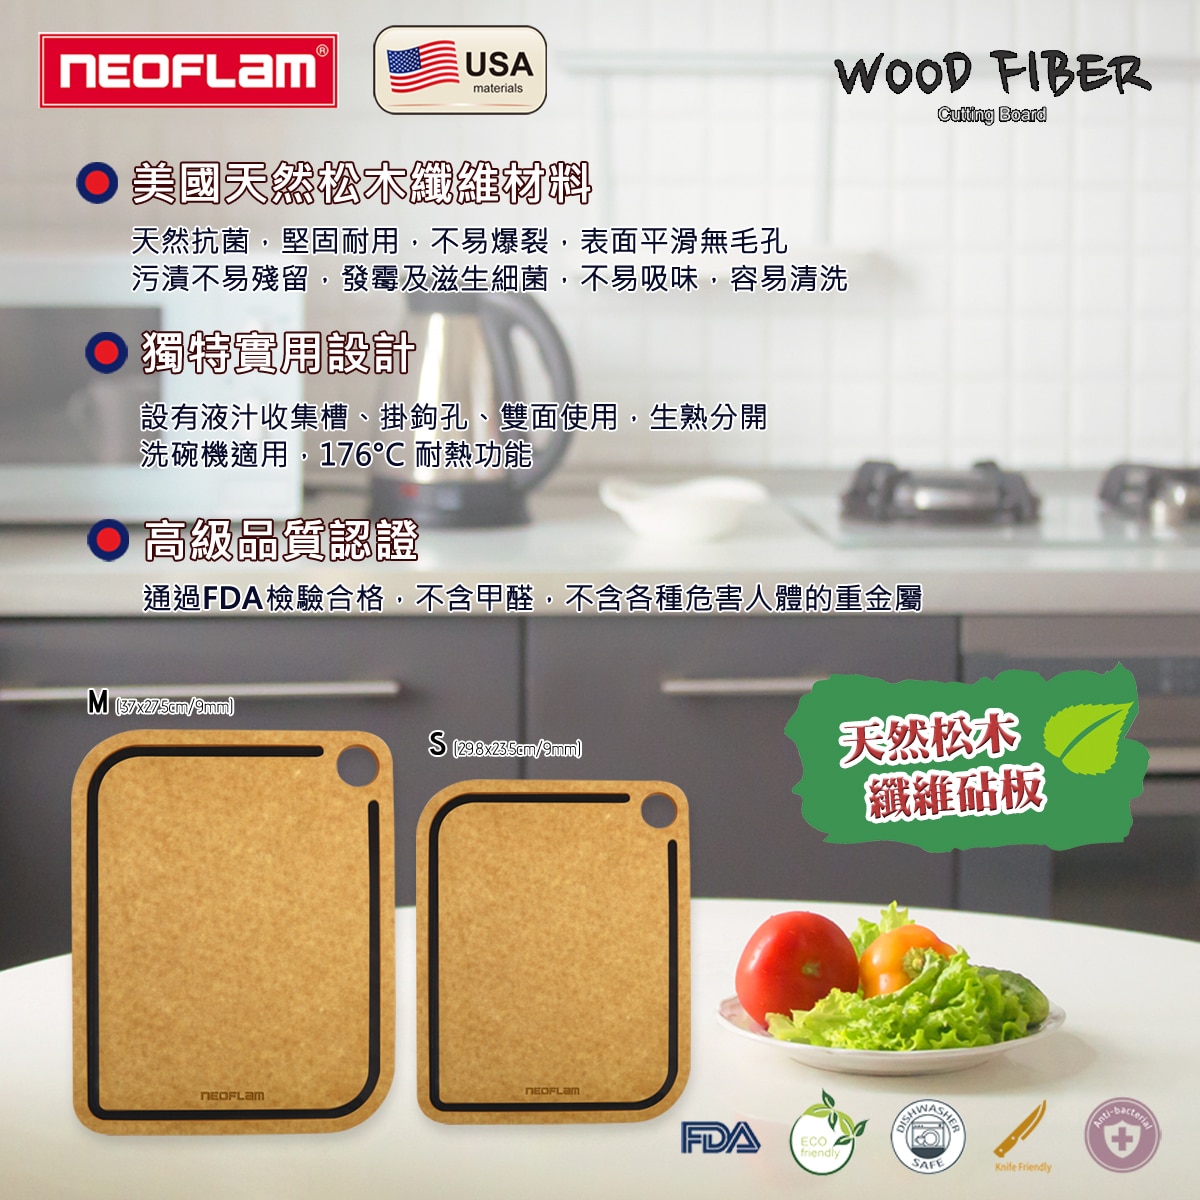 NEOFLAM Better Finger Wood Fiber Cutting Board Large 394mm x 269 mm -  Yamibuy.com